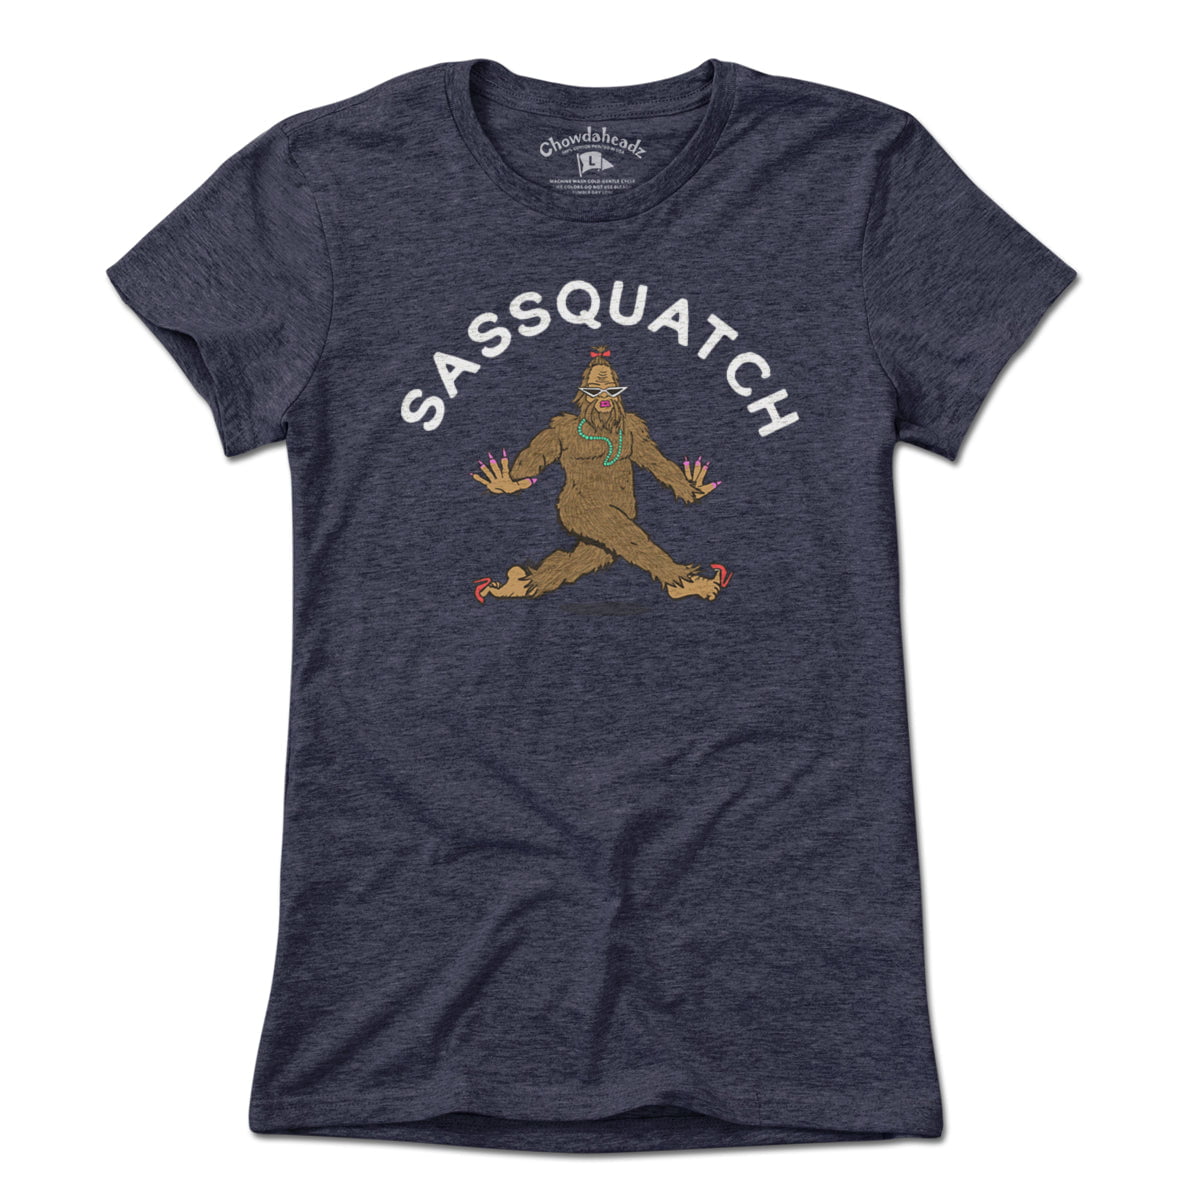 Sassquatch T-Shirt - Chowdaheadz